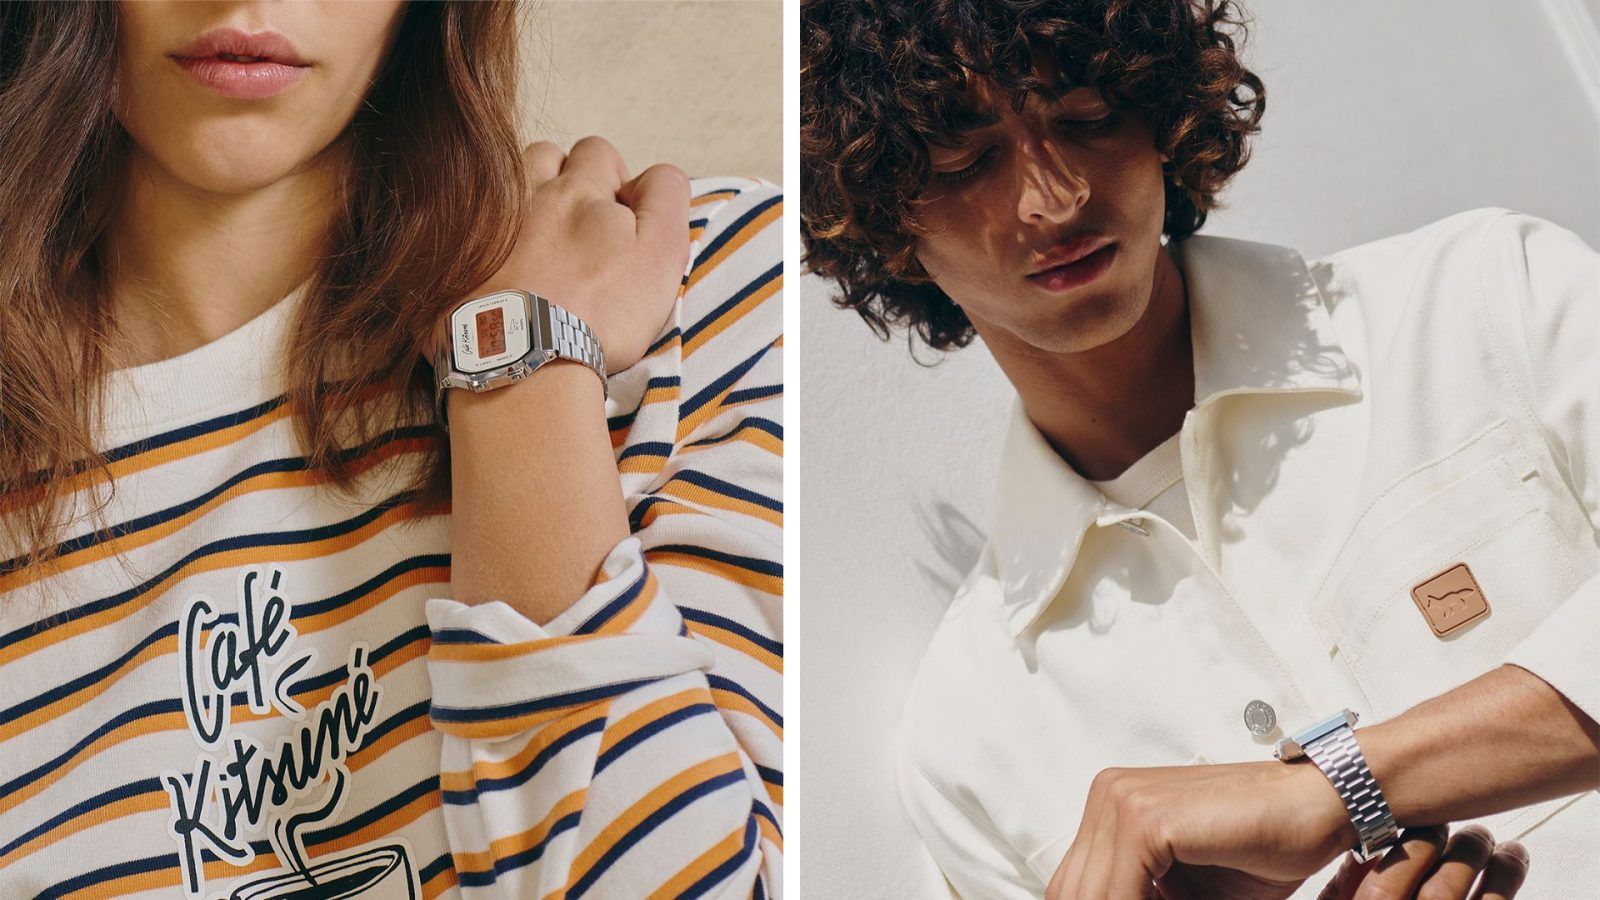 Café Kitsuné x Casio Vintage wristwatch blends style and functionality